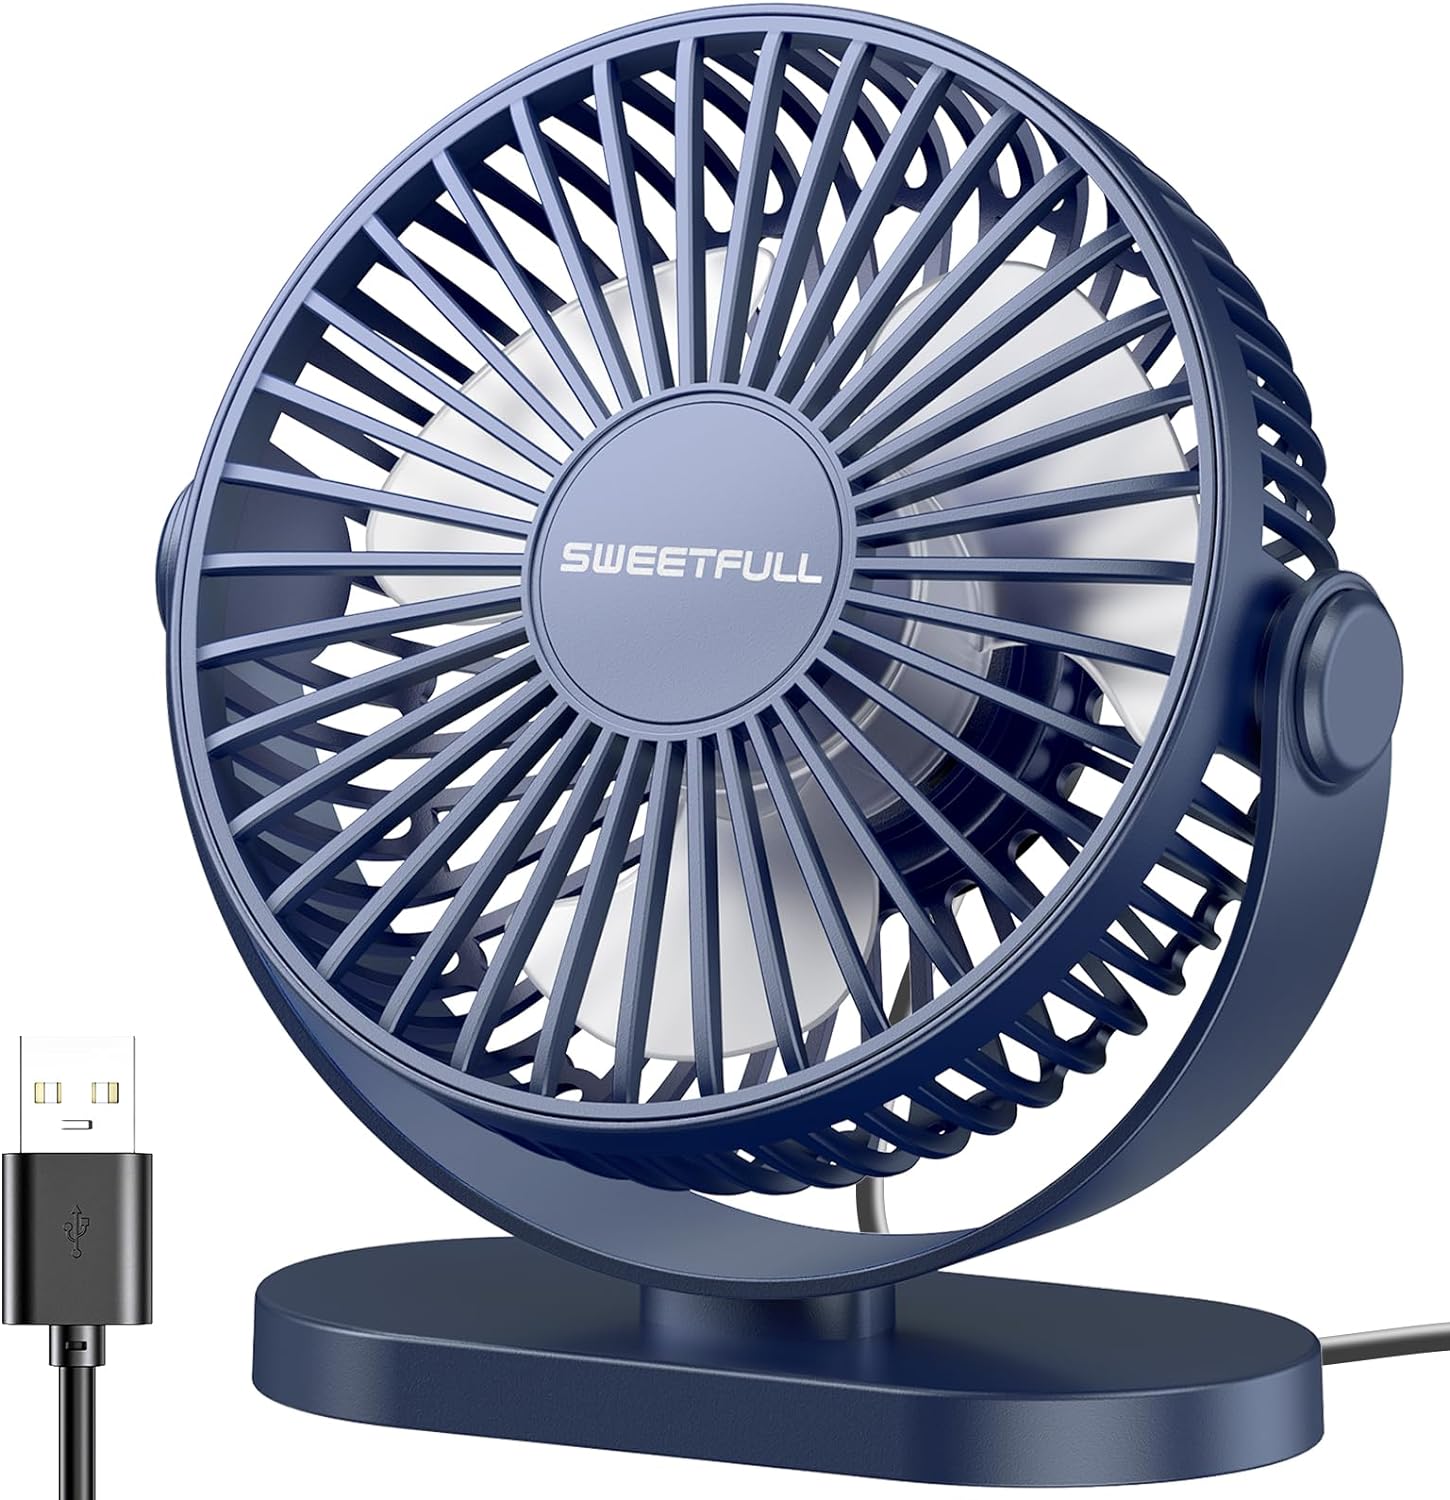 SWEETFULL USB Desk Fan Small Quiet - 3 Speeds Mini Personal Portable Fan 360 Rotation Adjustable, 5 Inch Office Table Cooling Gadgets on Desktop (Blue)